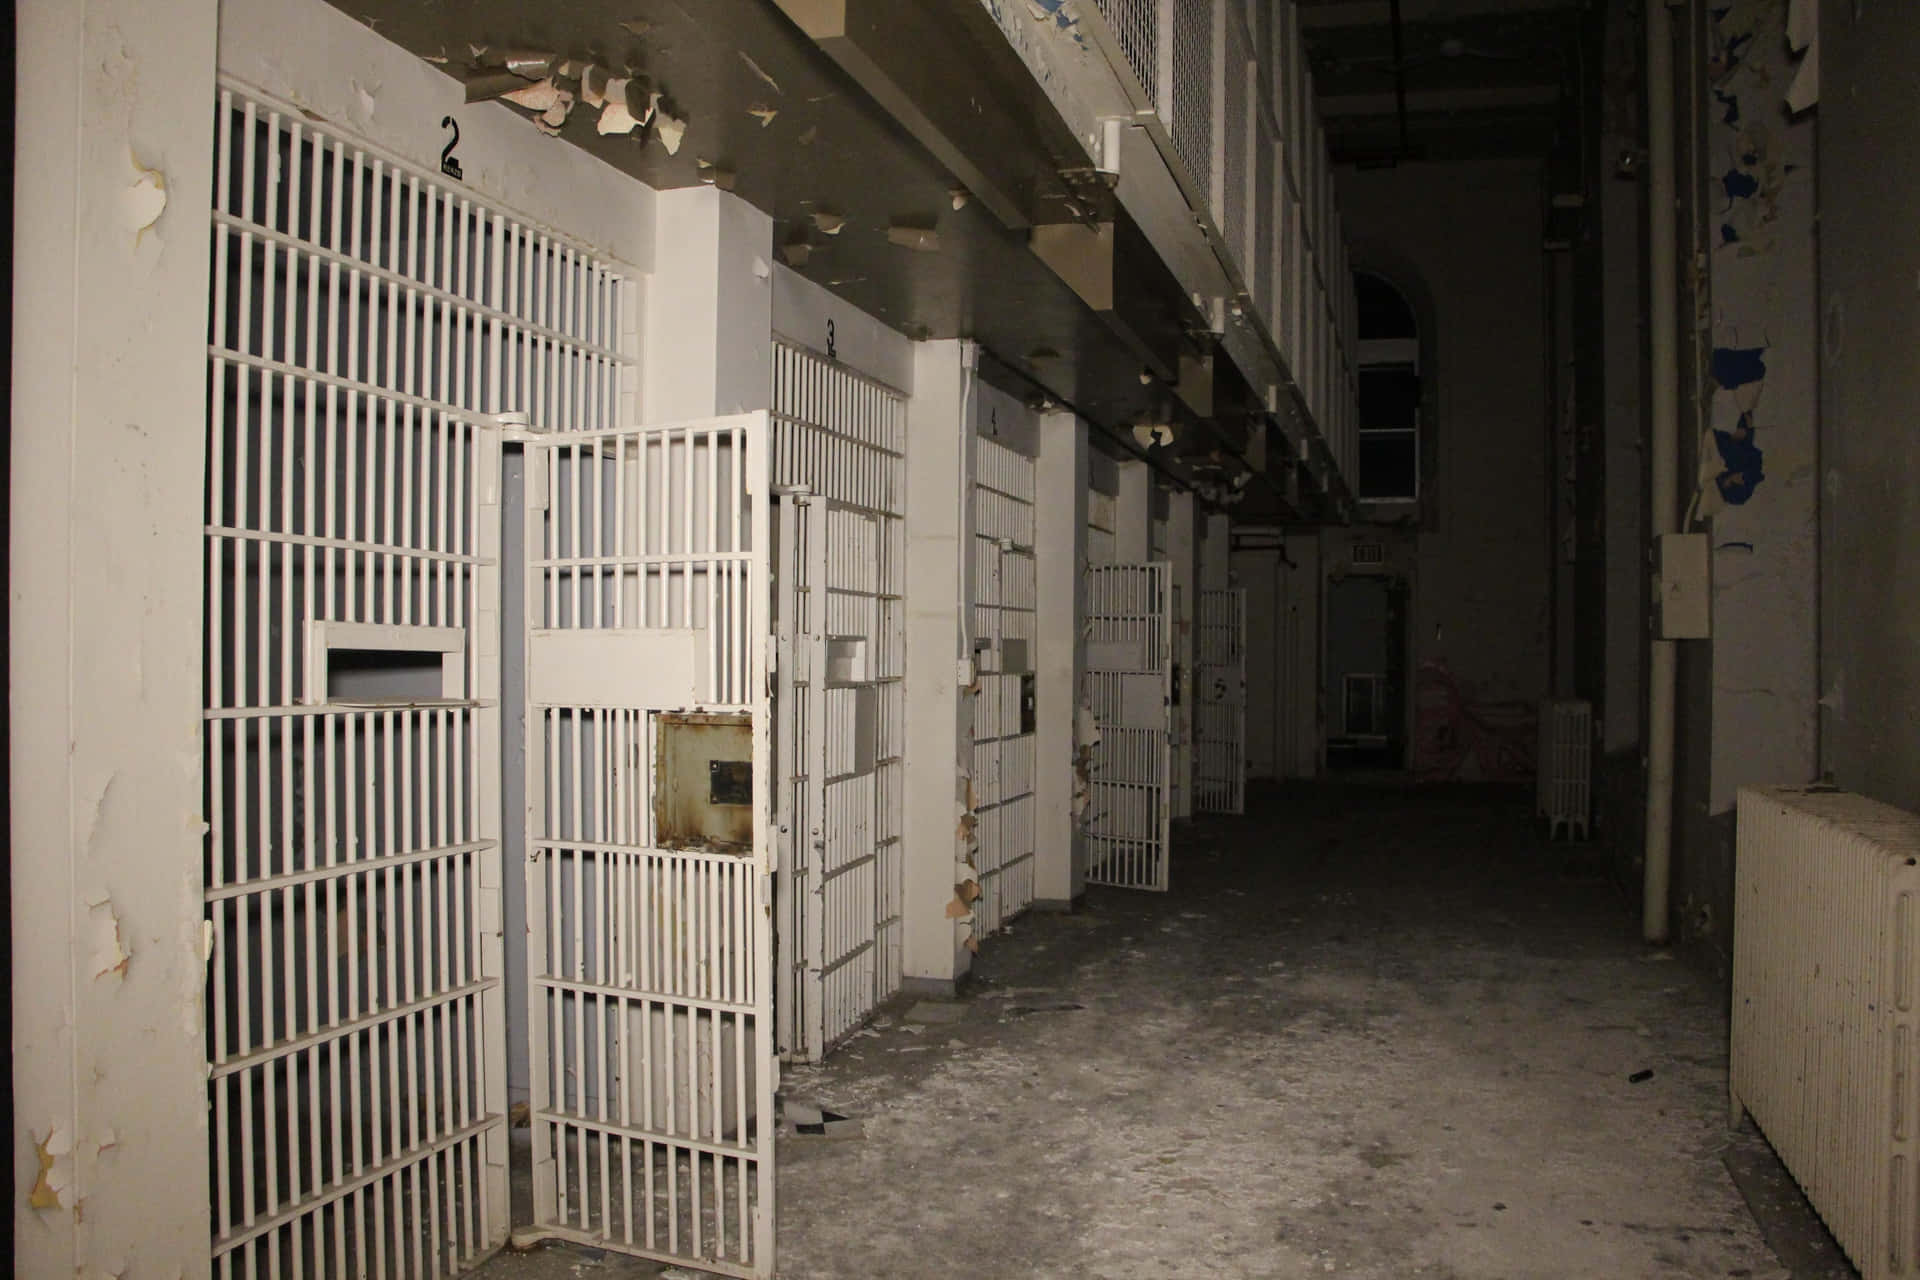 A Prison Cell